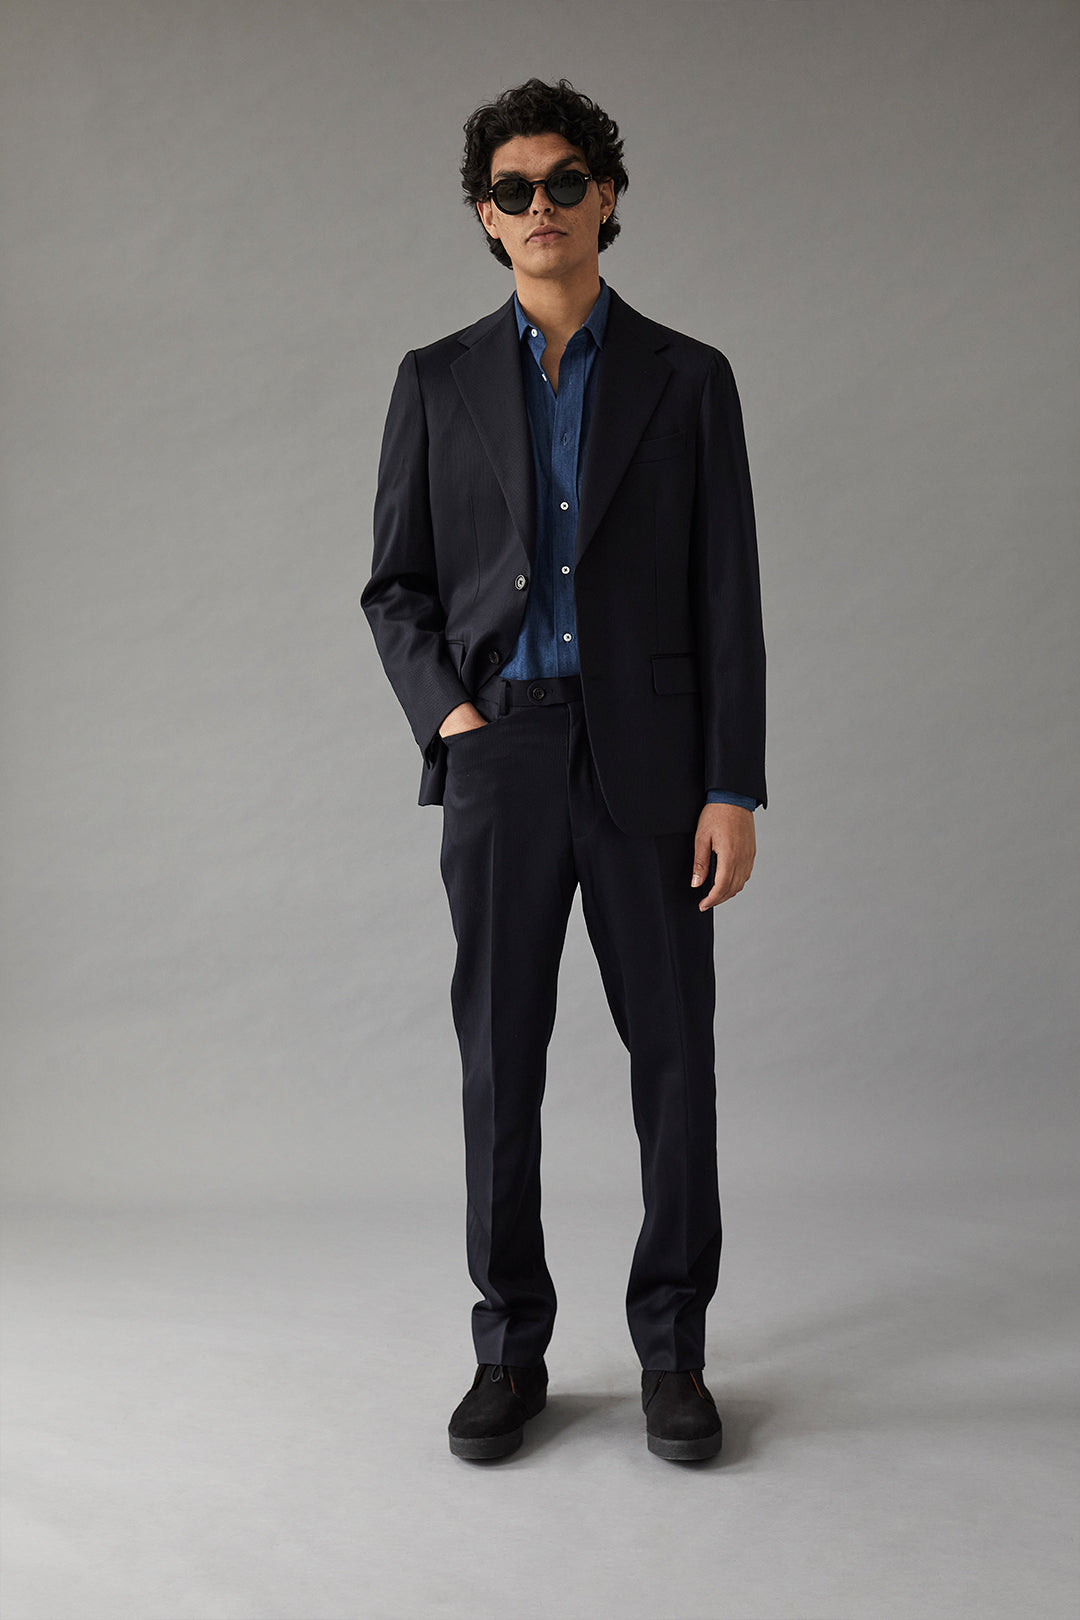 Tailored Suits Prahran | Custom Suits Prahran | Oscar Hunt